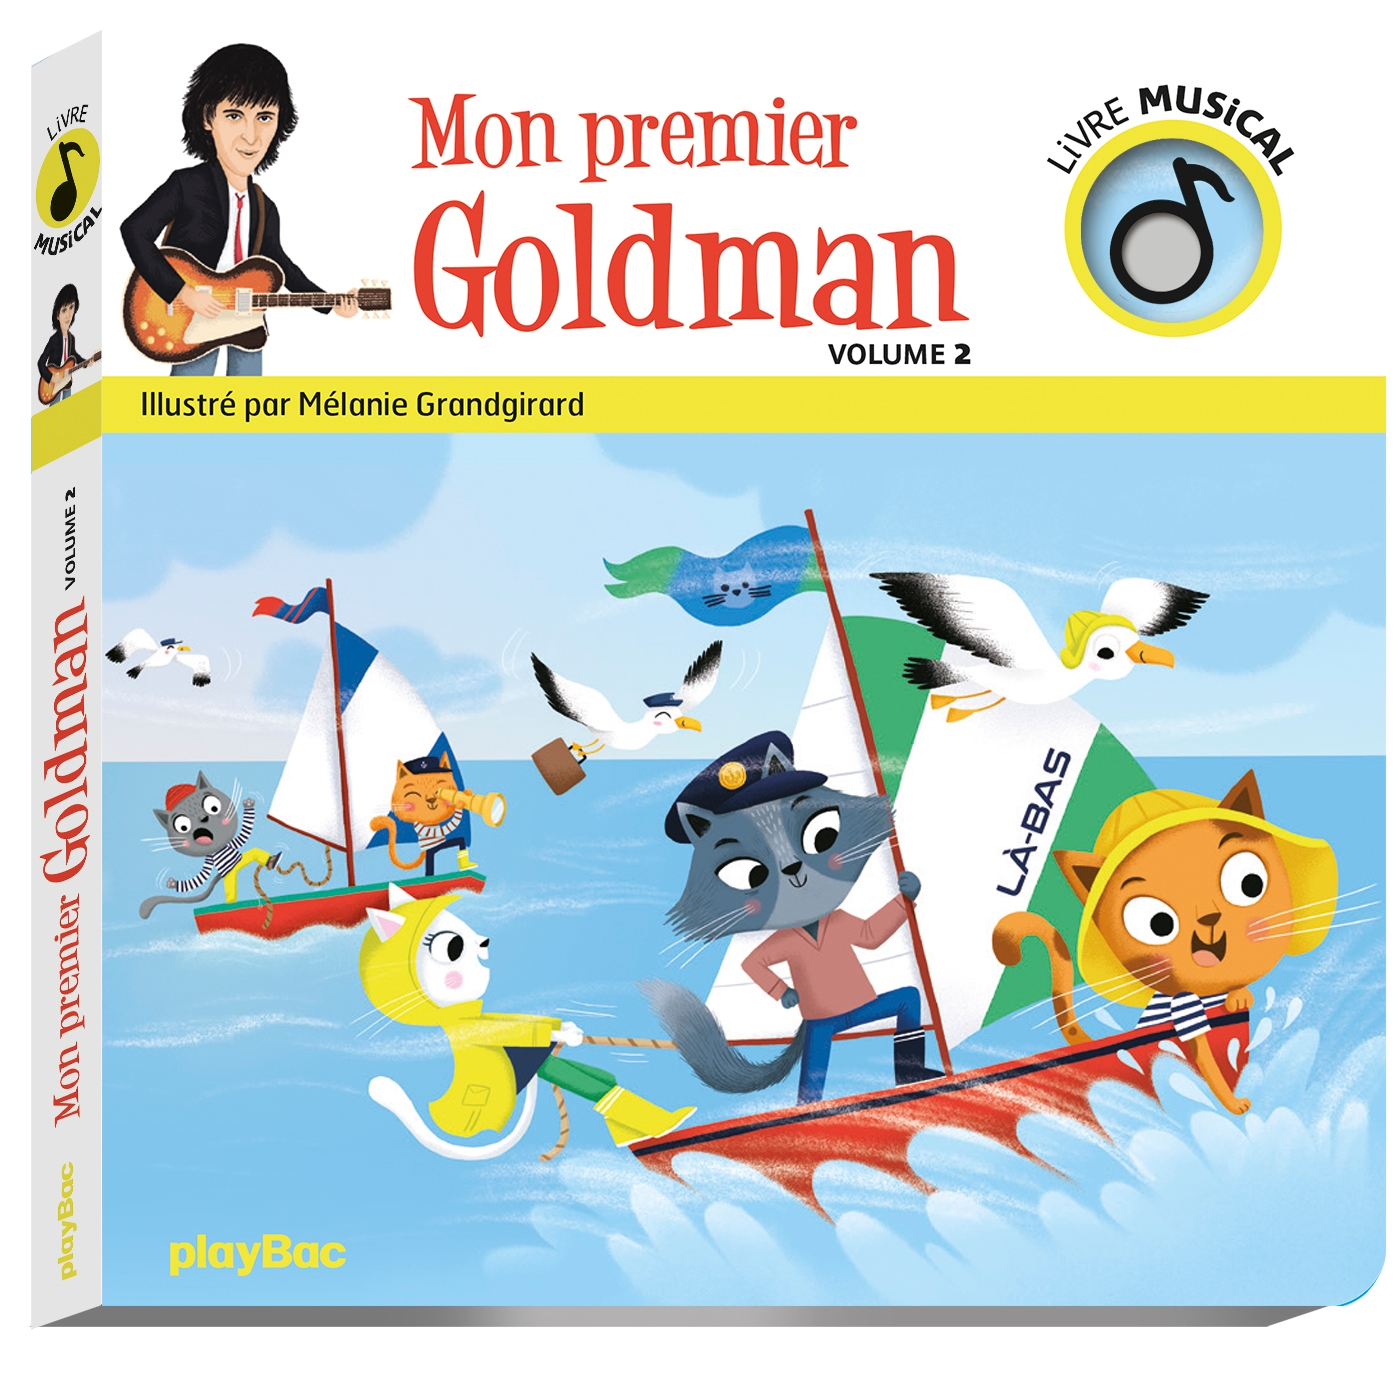 Livre musical - Mon premier Goldman vol 2 - Playbac